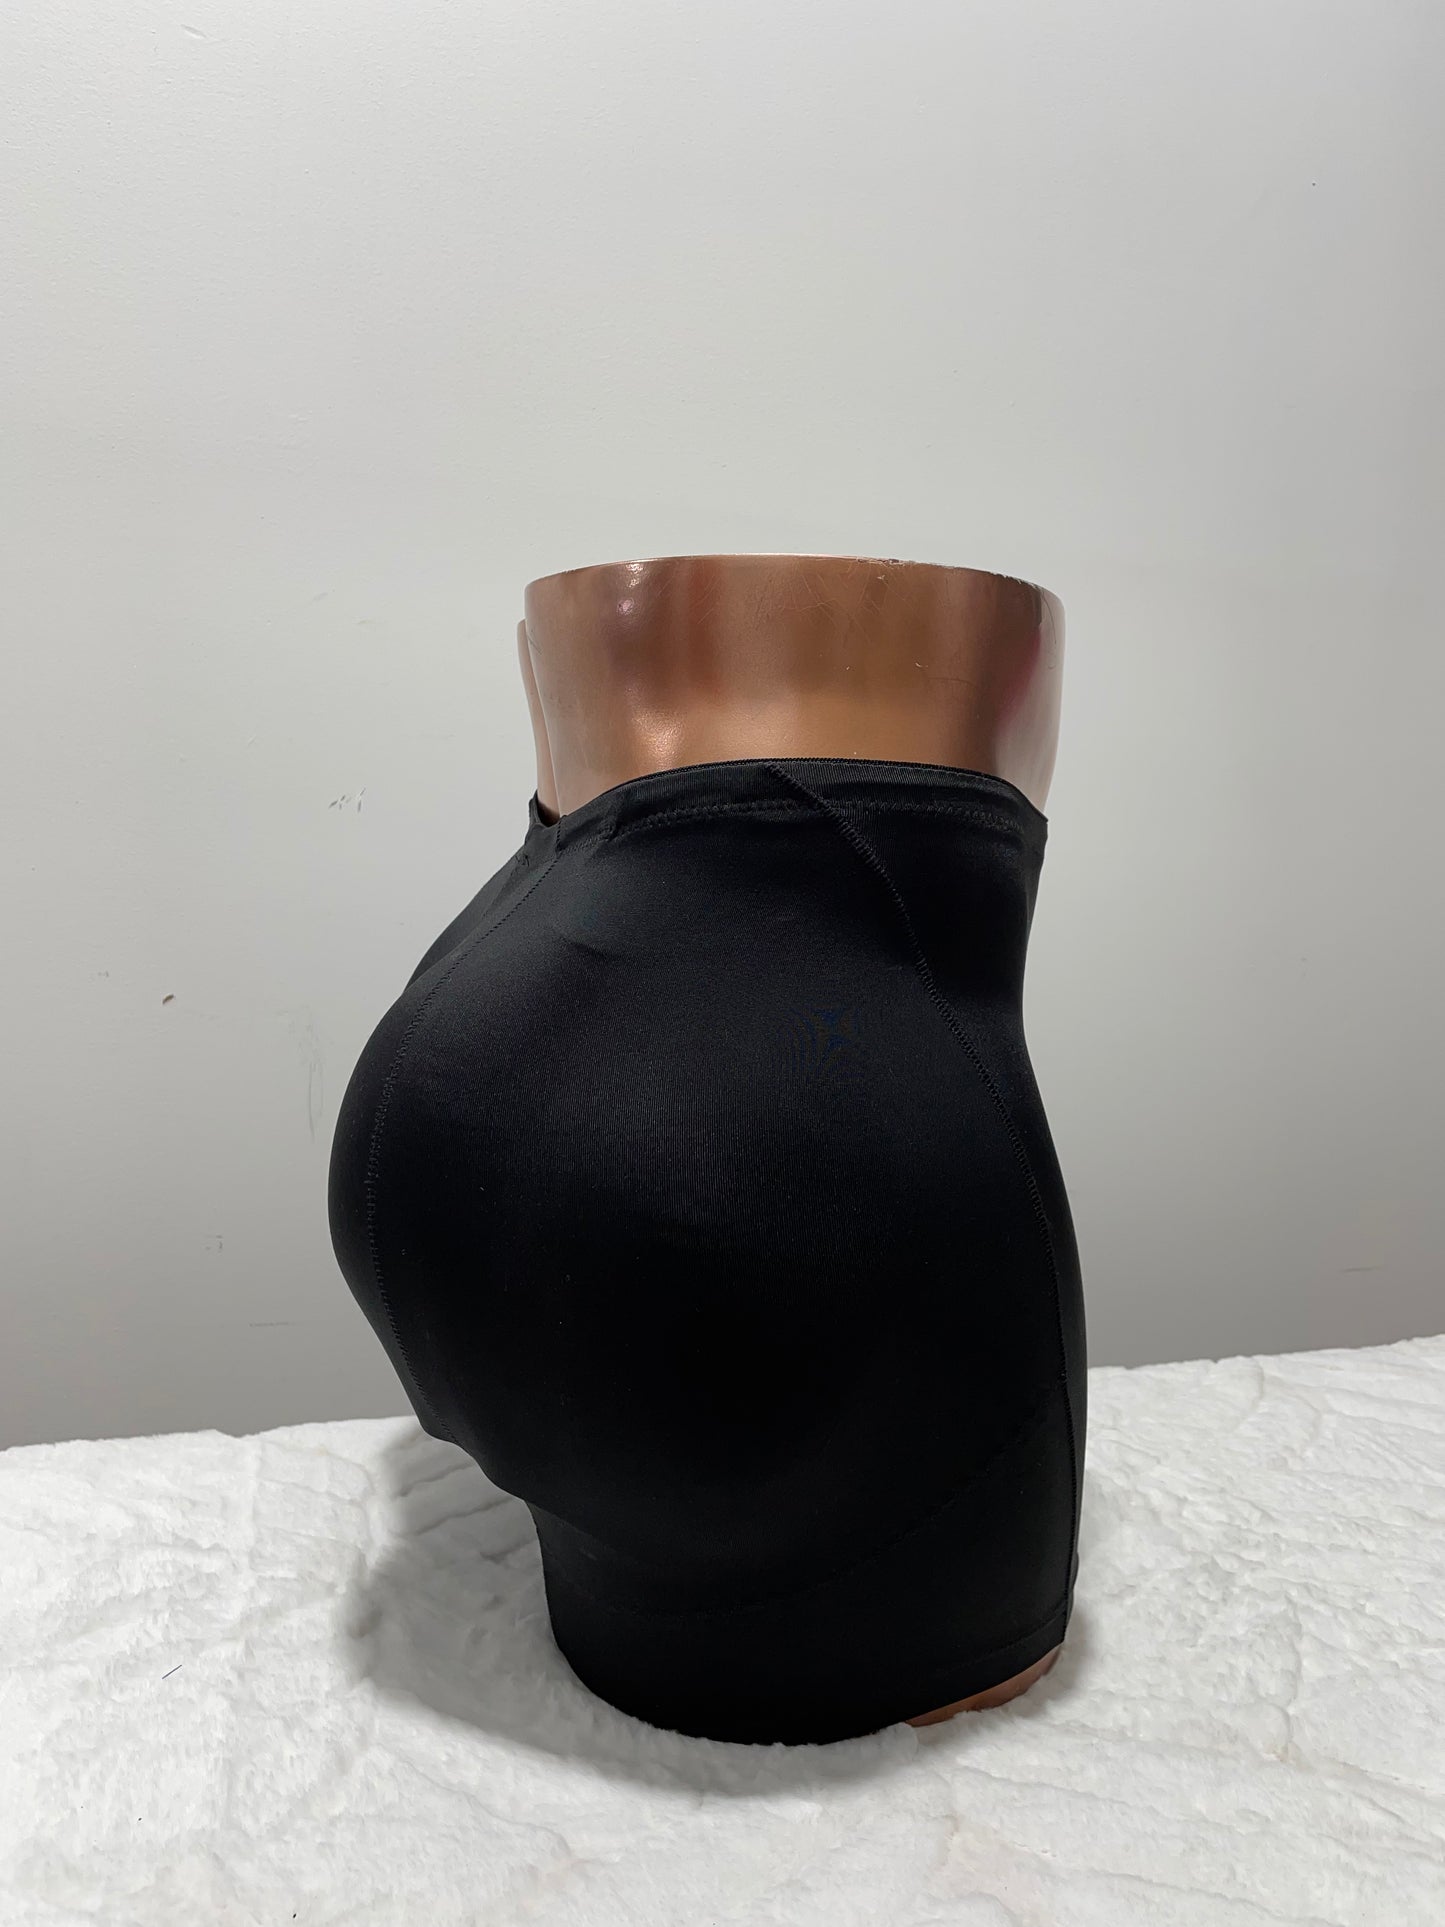 Black Butt Form